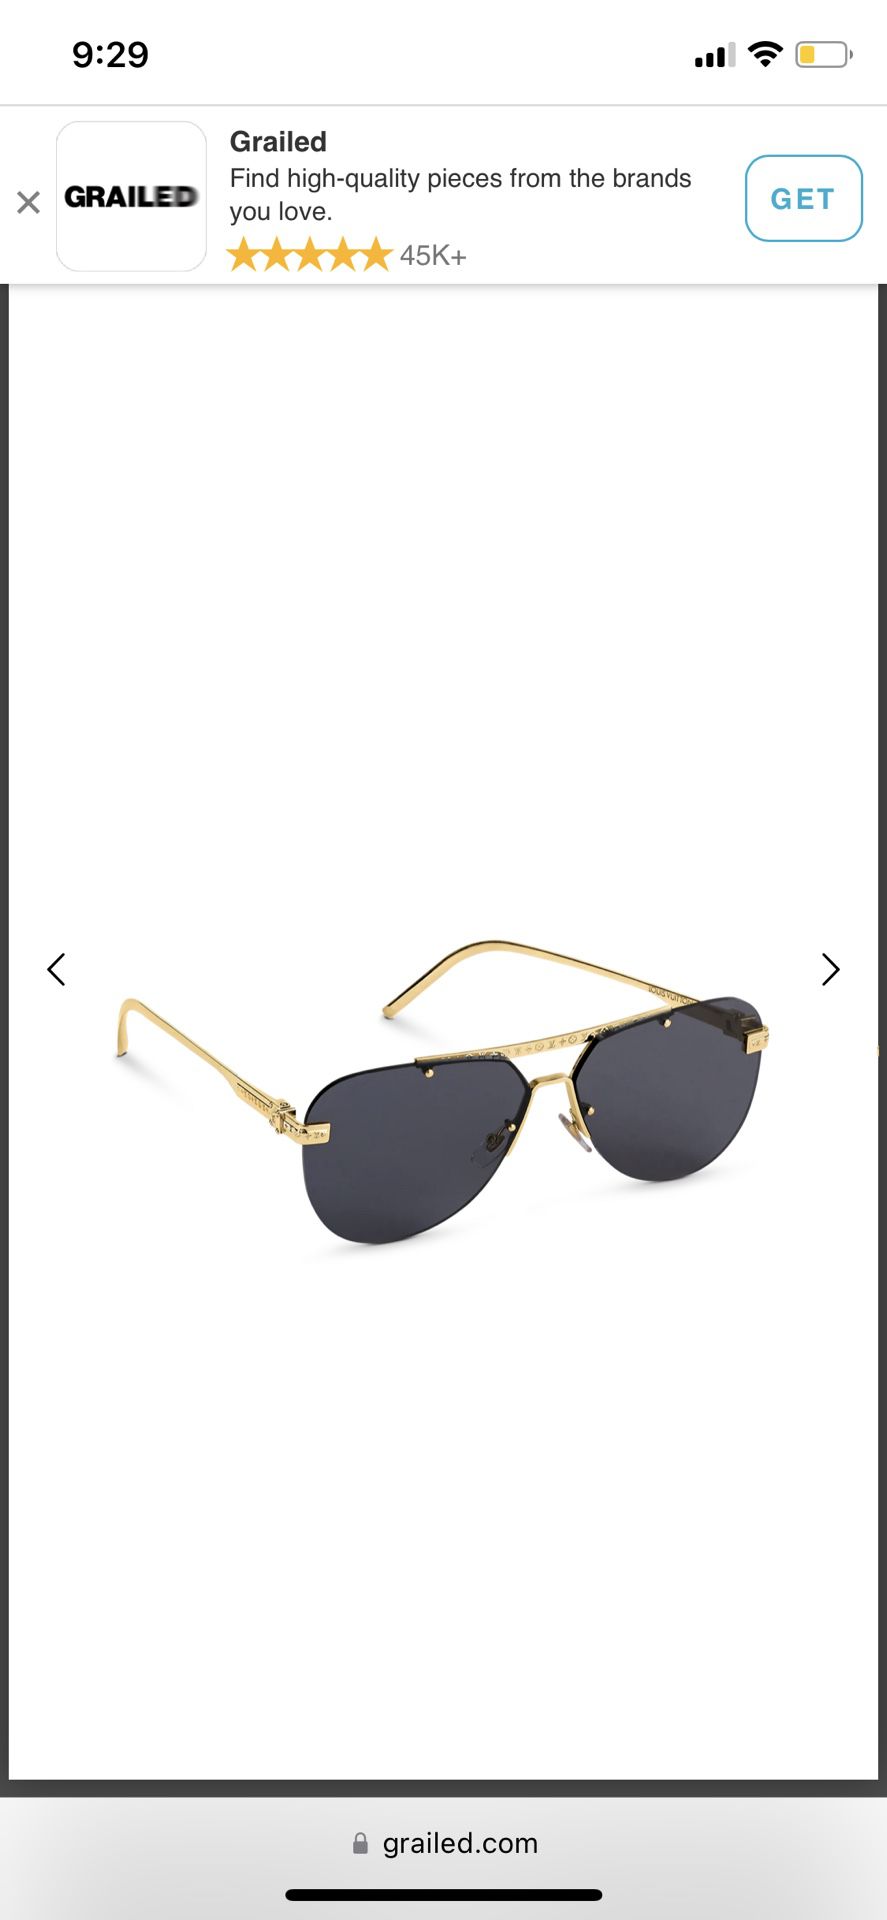 Louis Vuitton Men Sunglasses for Sale in Dallas, TX - OfferUp